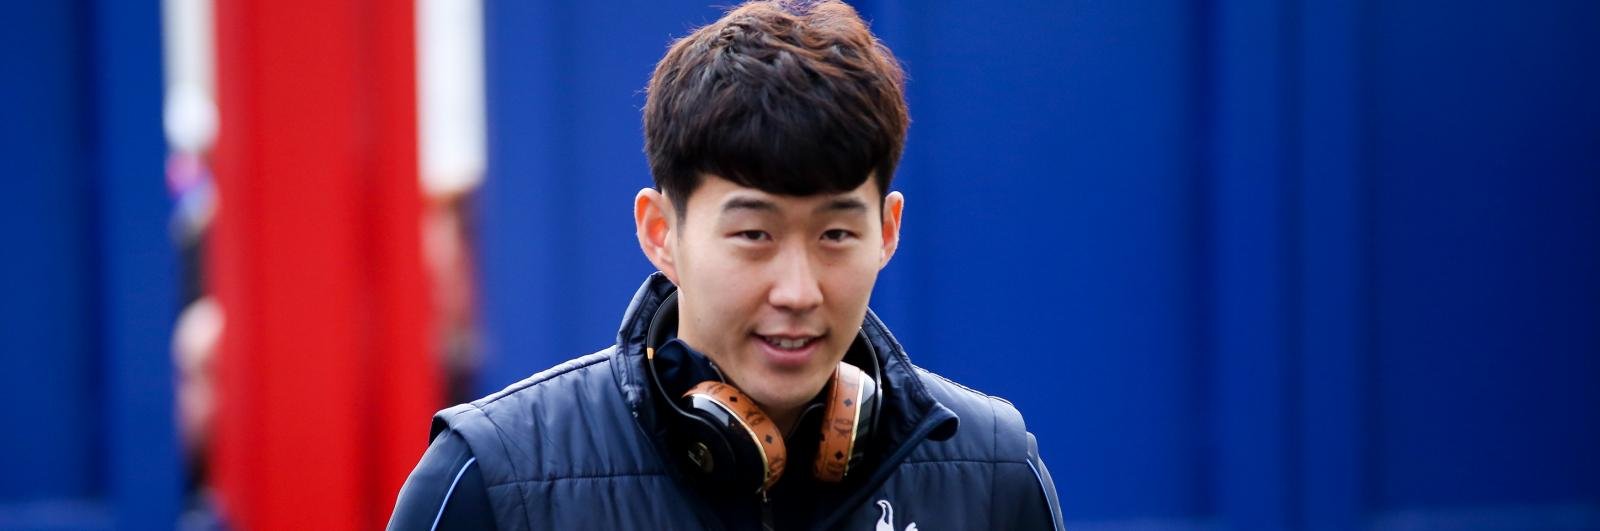 Profile: Tottenham’s in-form forward, Son Heung-min